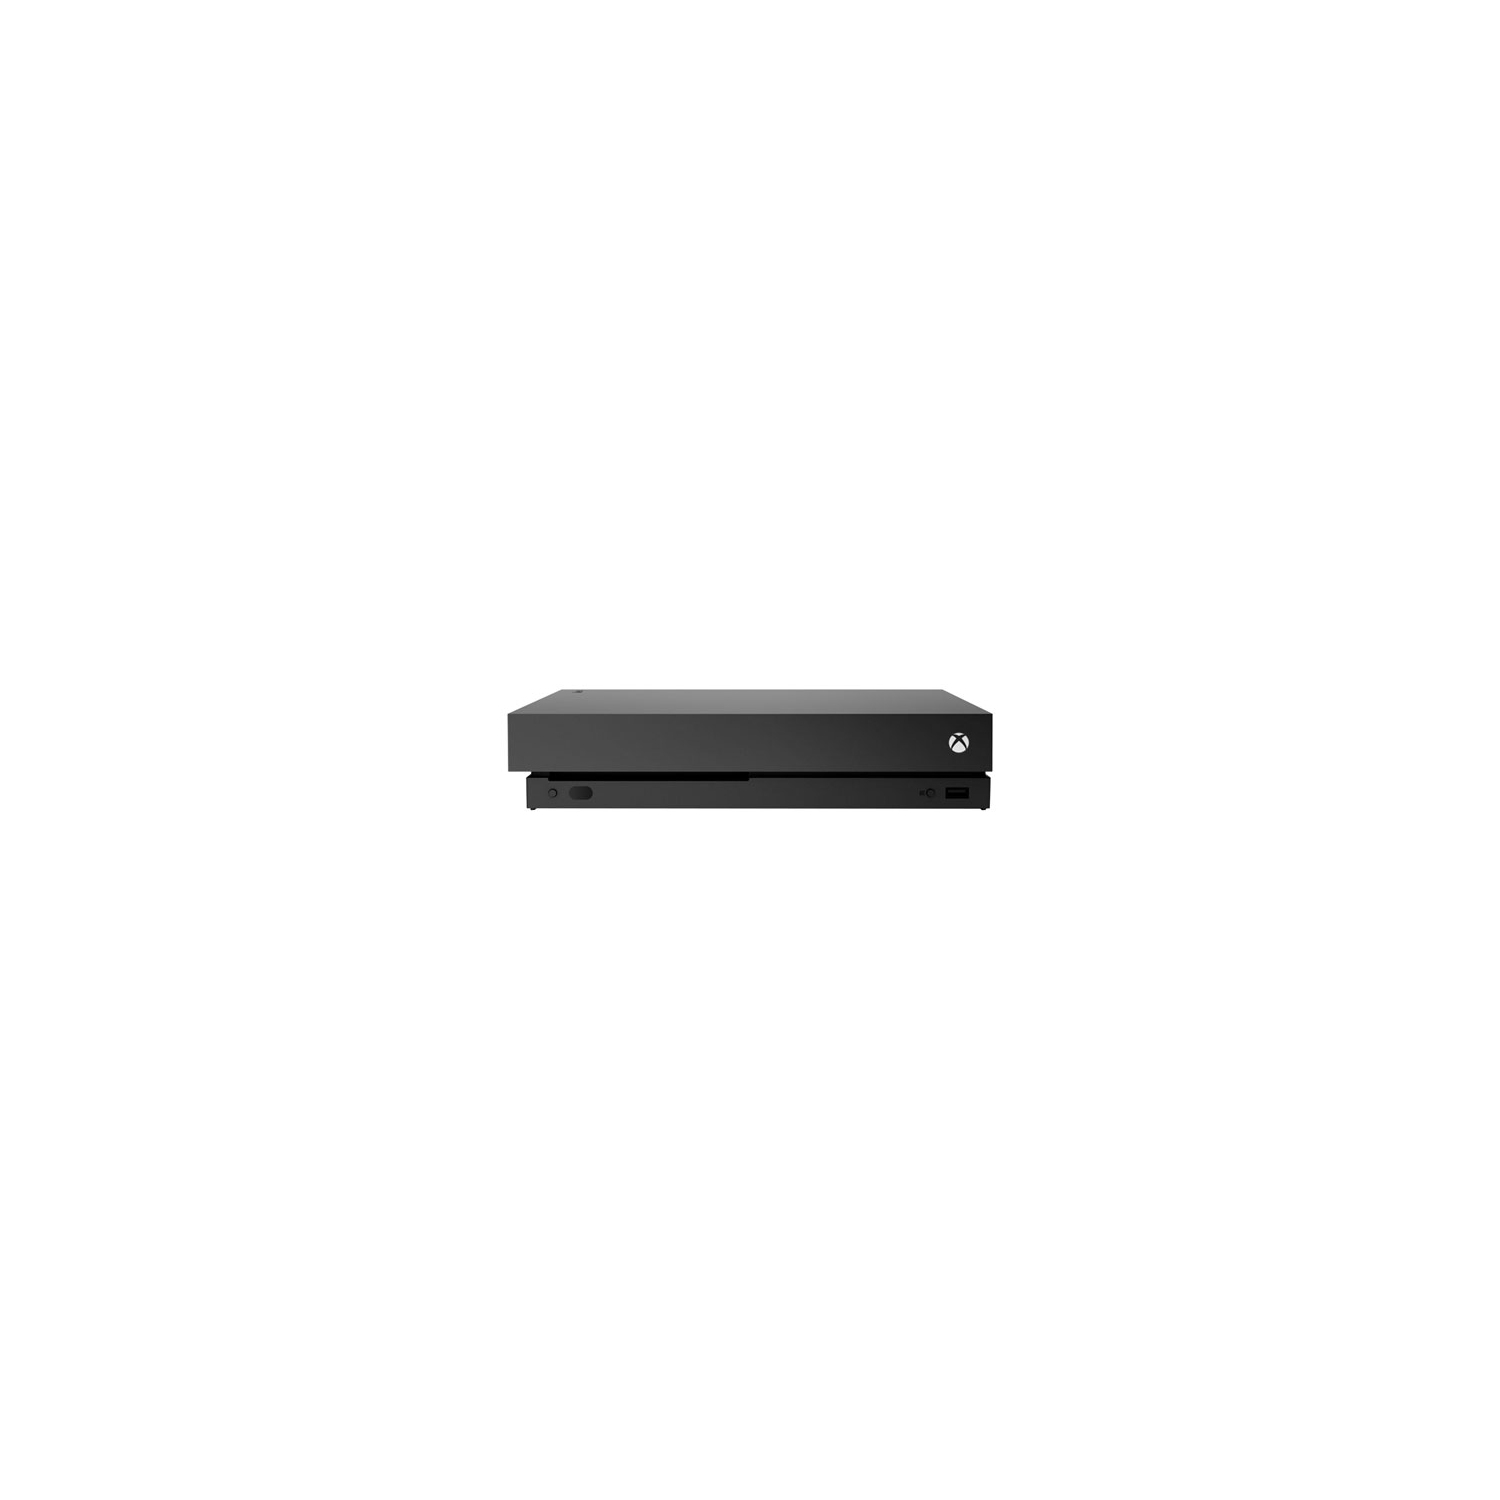 Refurbished (Good) - Xbox One X 1TB Console - Black